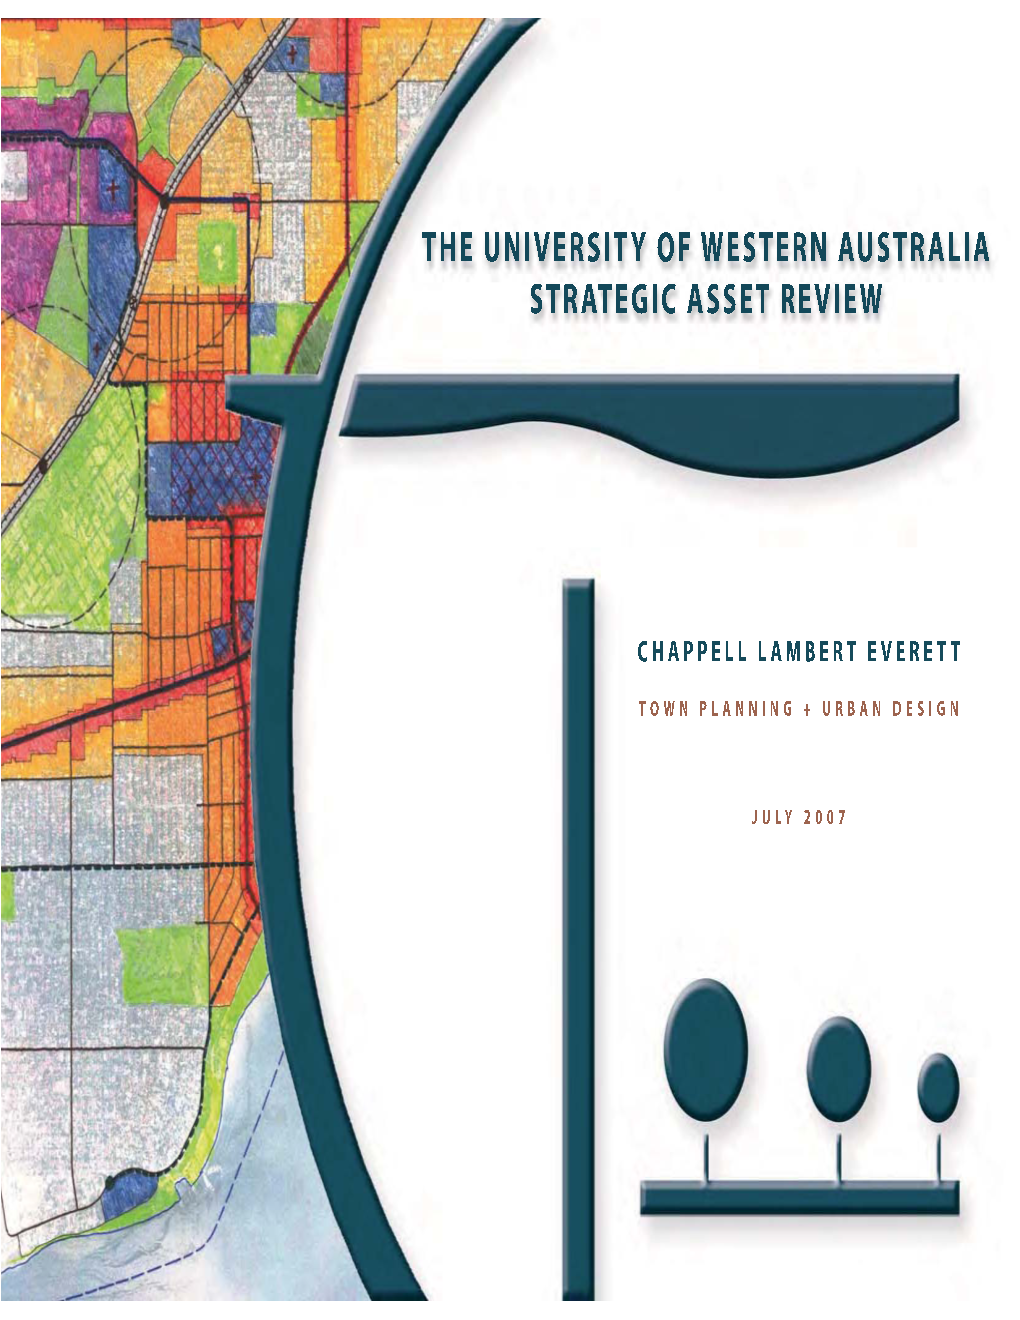 The University of Western Australia Strategic Asset Review